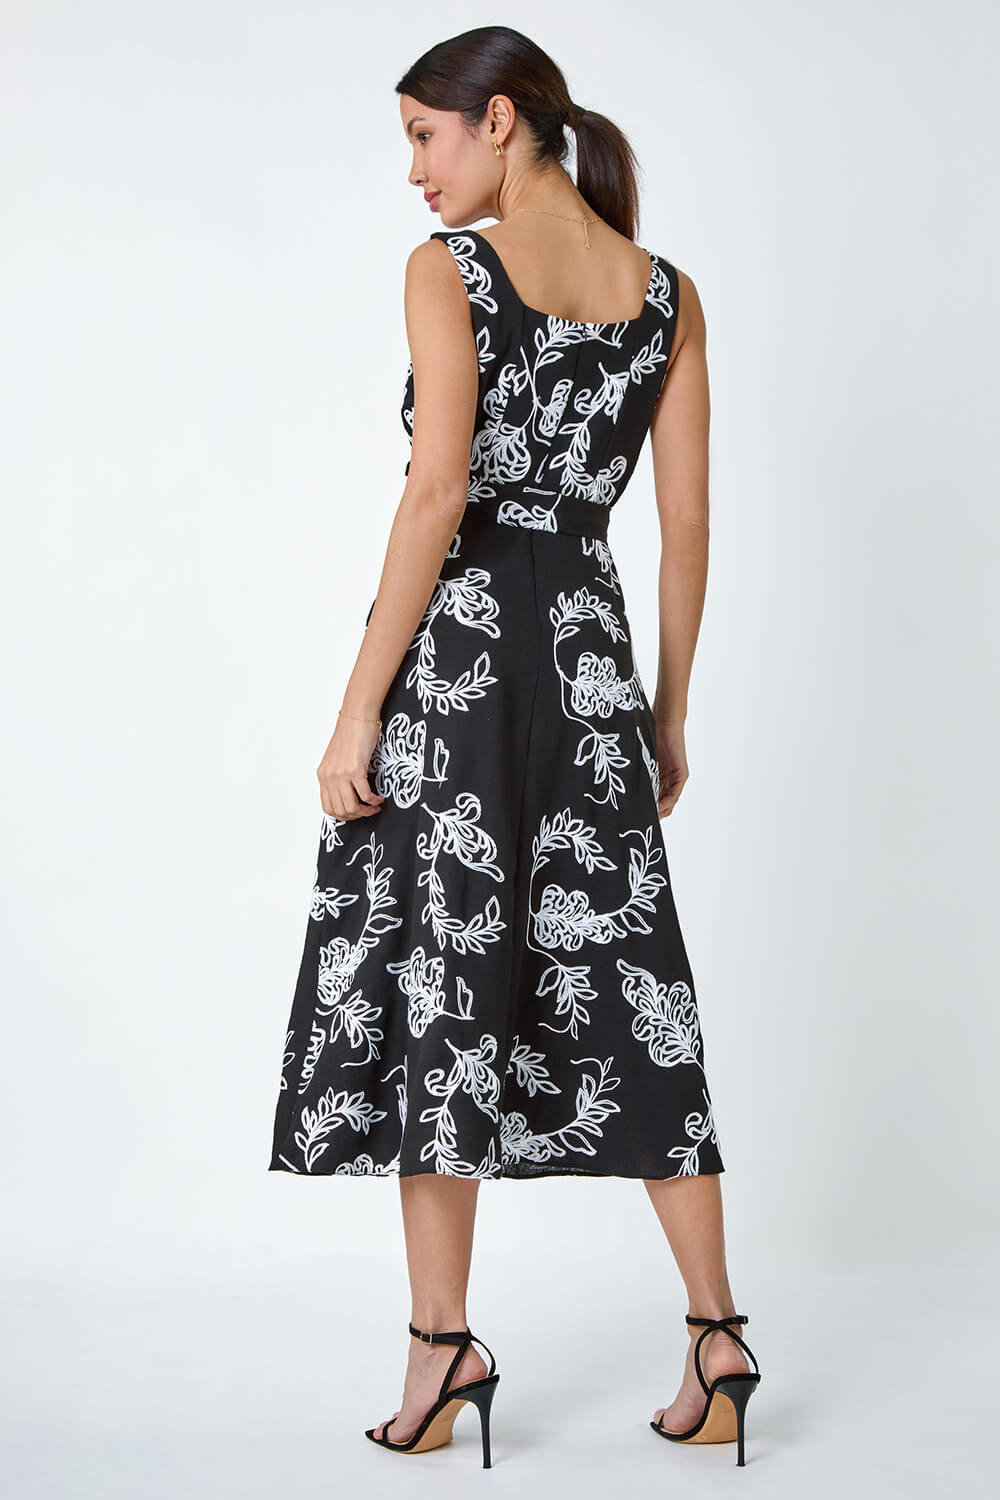 Black Floral Embroidered Cotton Blend Dress, Image 3 of 5